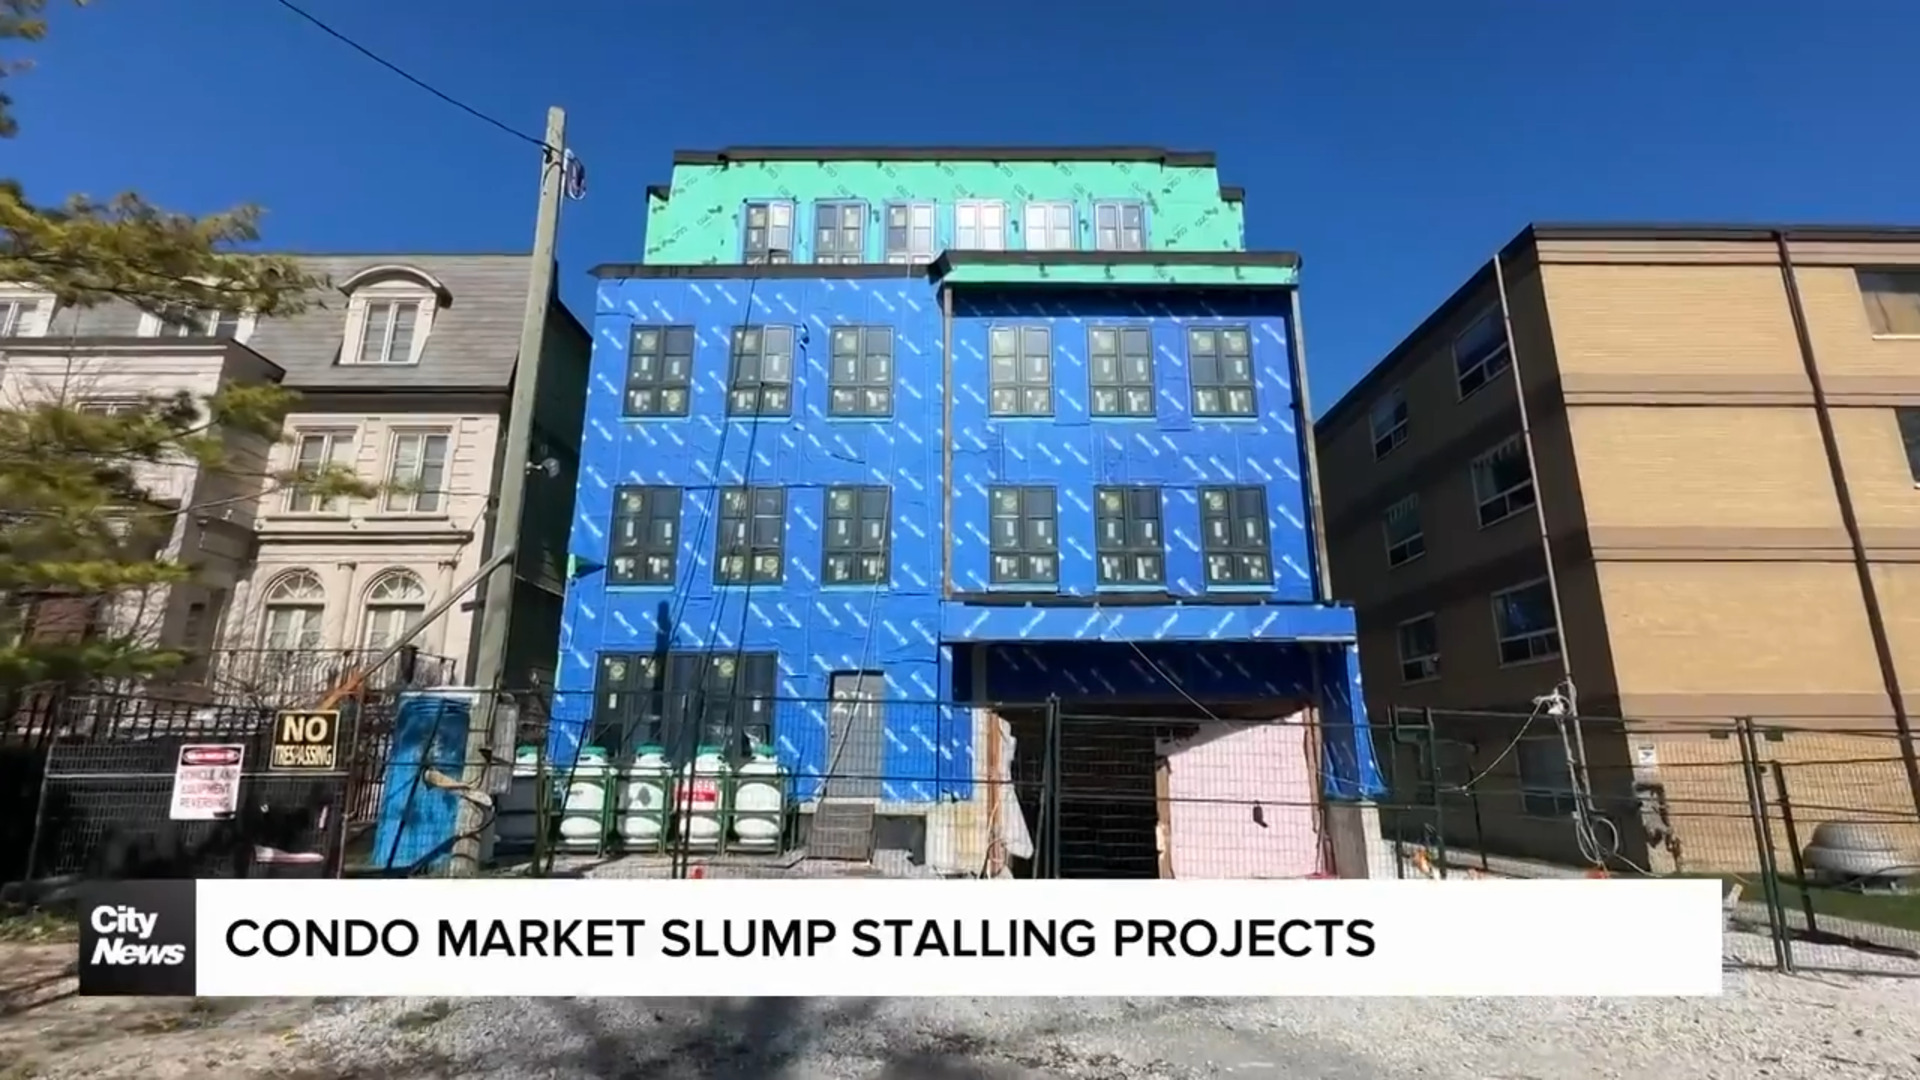 Condo market slump stalling construction projects